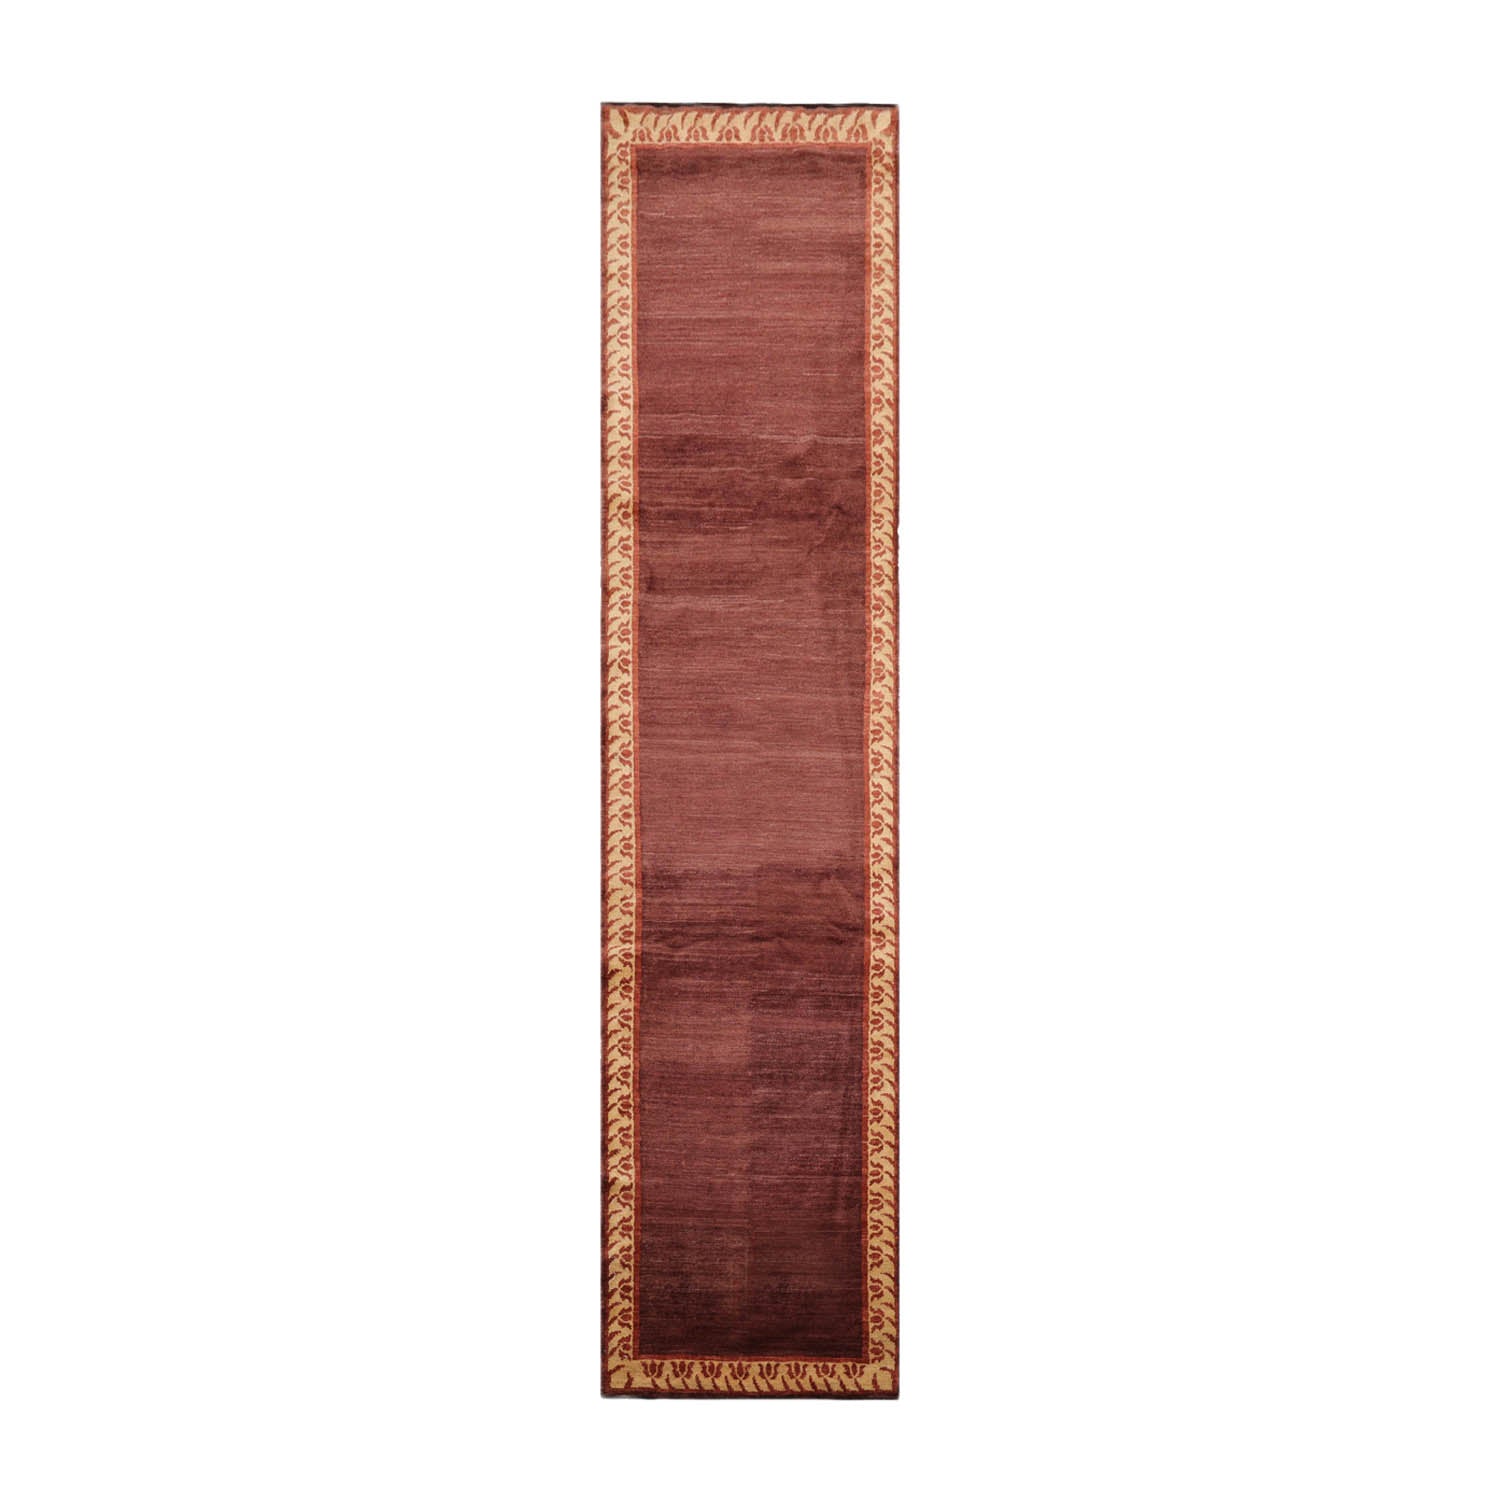 Elinor Runner Hand Knotted Tibetan 100% Wool Michaelian & Kohlberg Modern & Contemporary Oriental Area Rug Rust, Beige Color